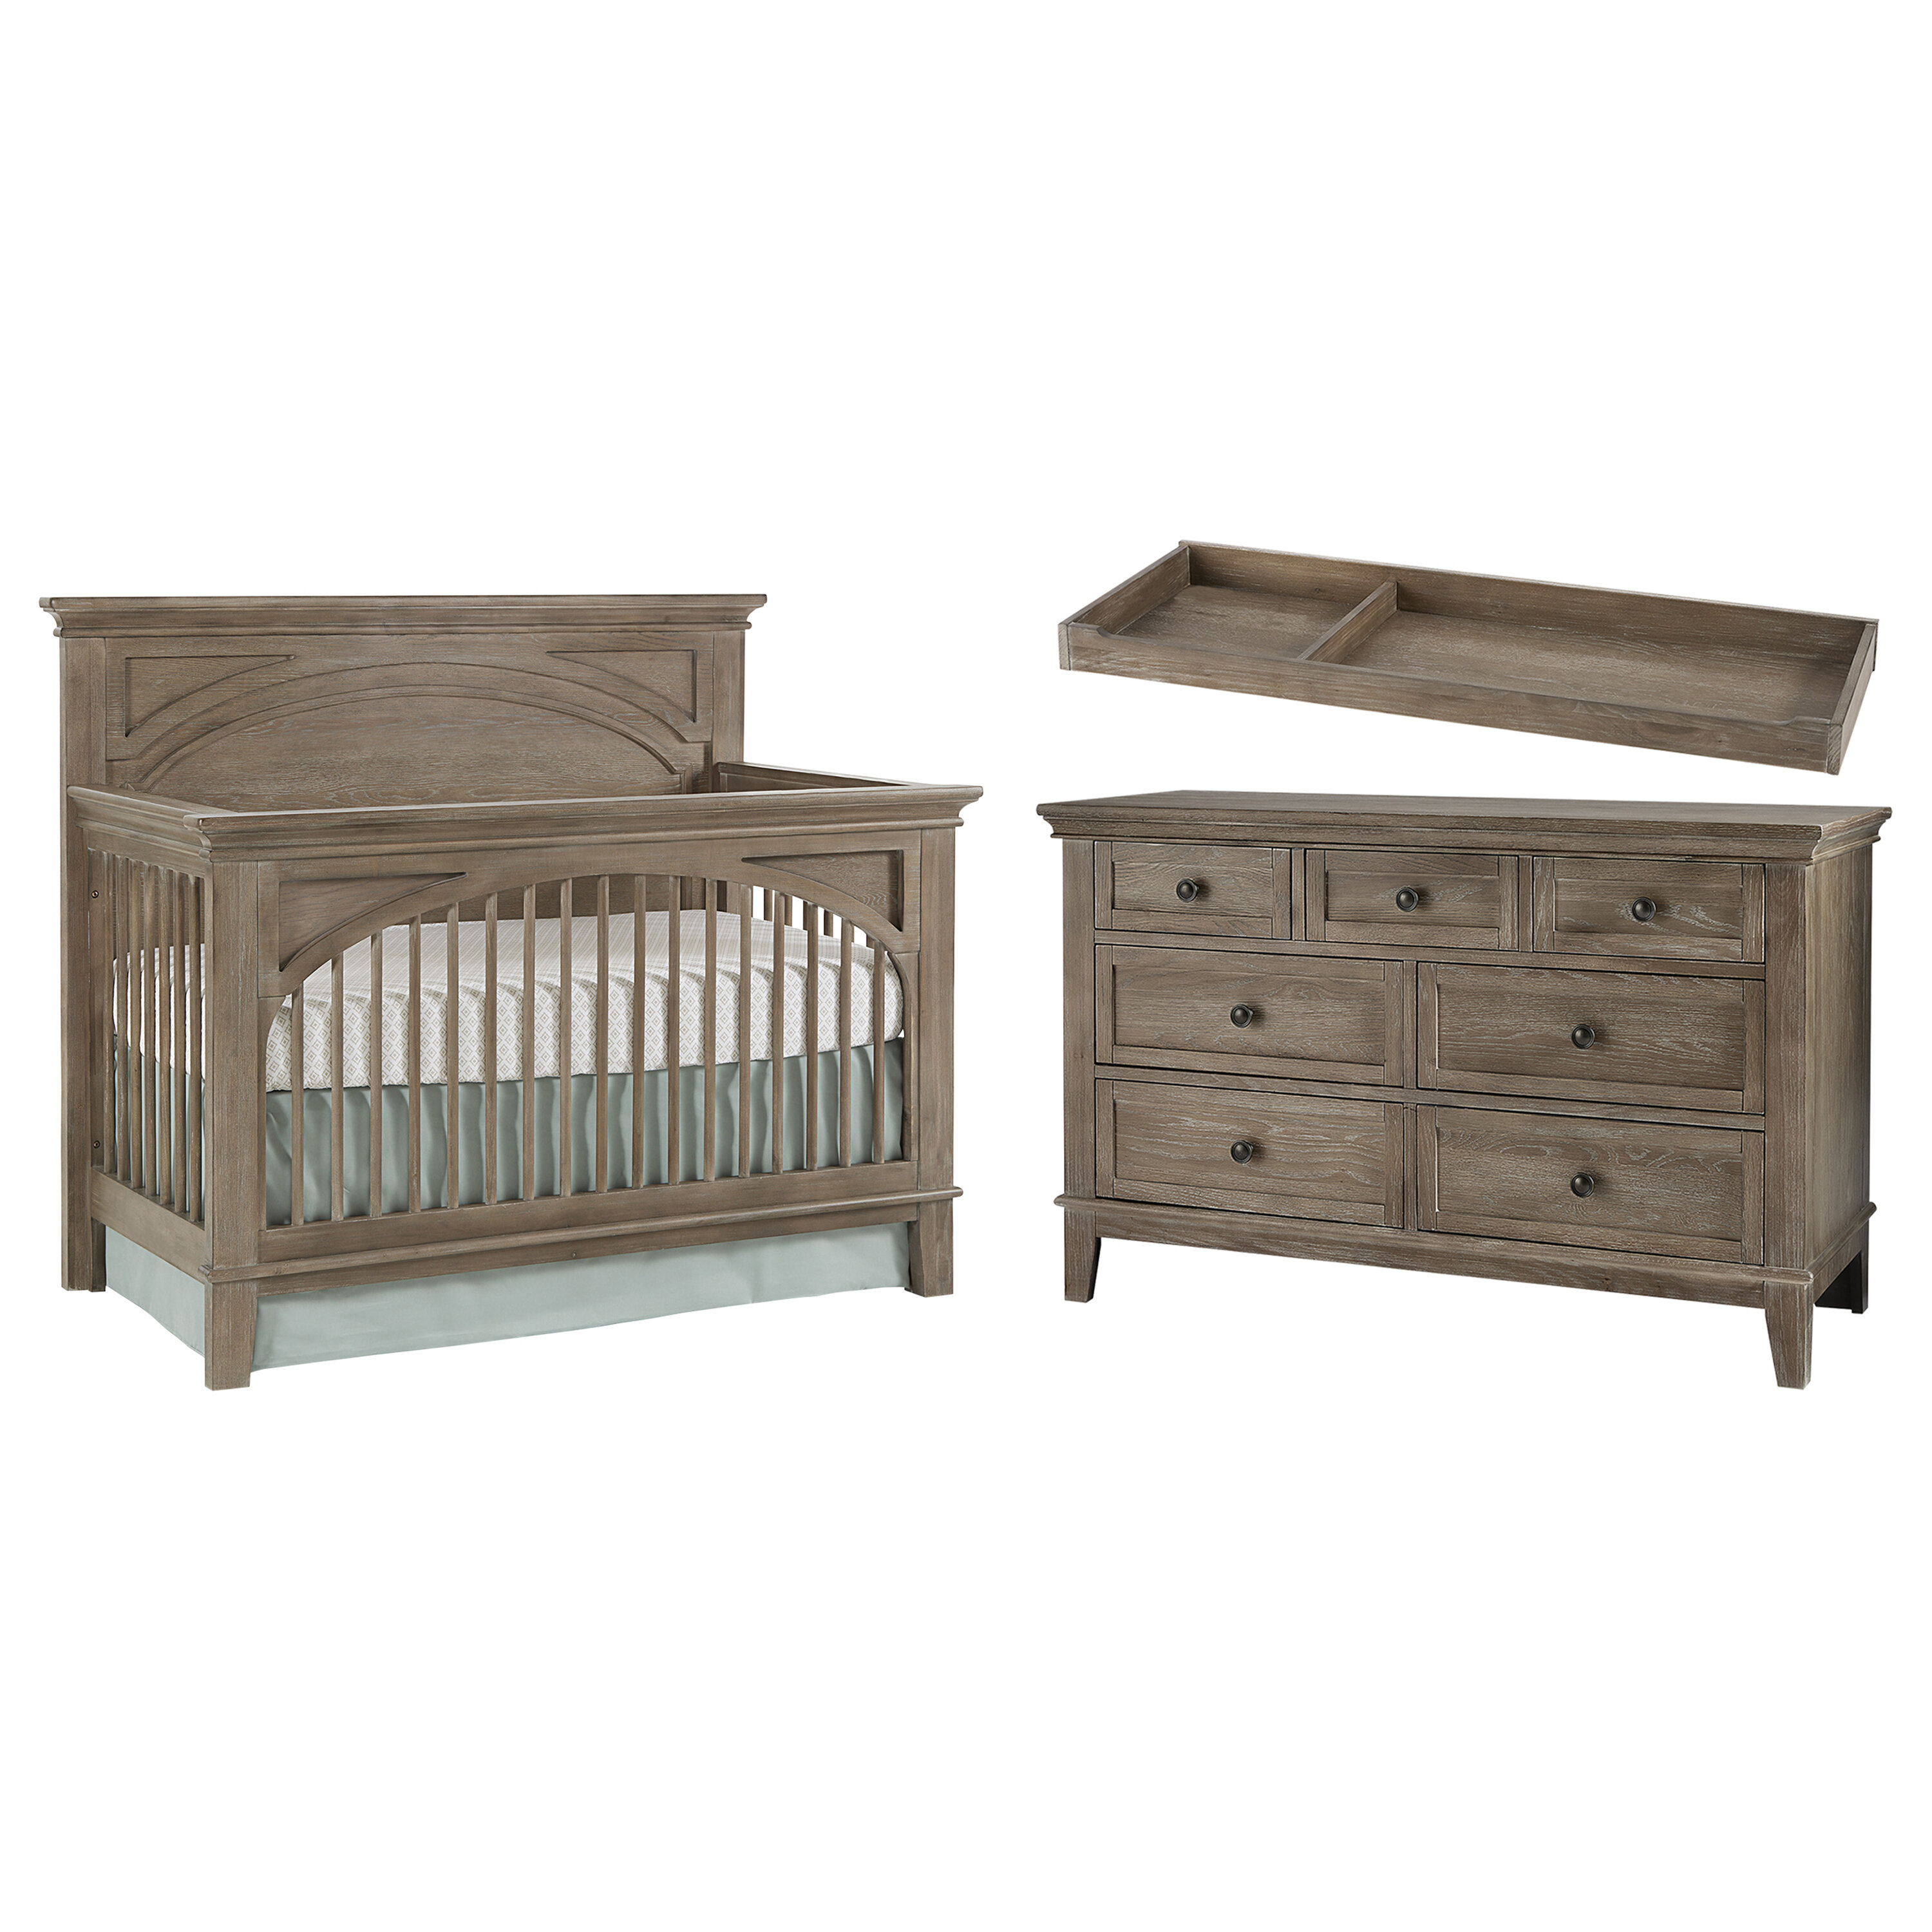 wooden nursery furniture sets